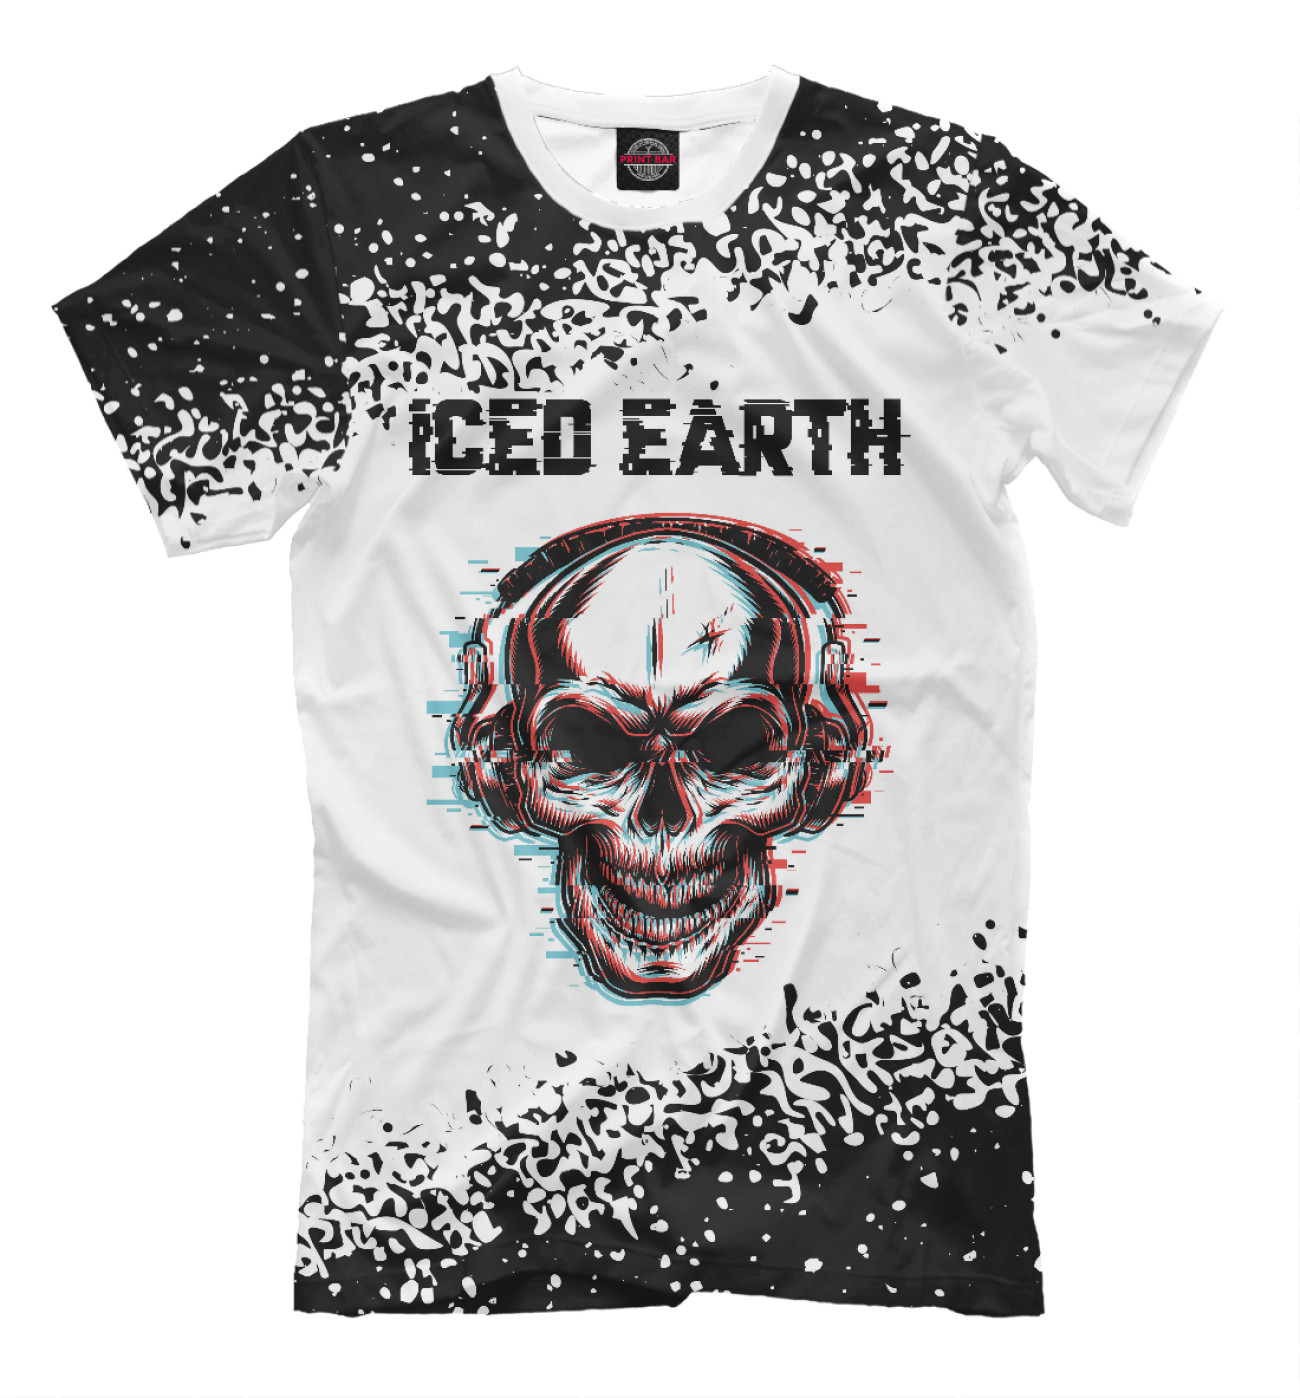 Мужская Футболка Iced Earth - Череп, артикул: IER-564791-fut-2